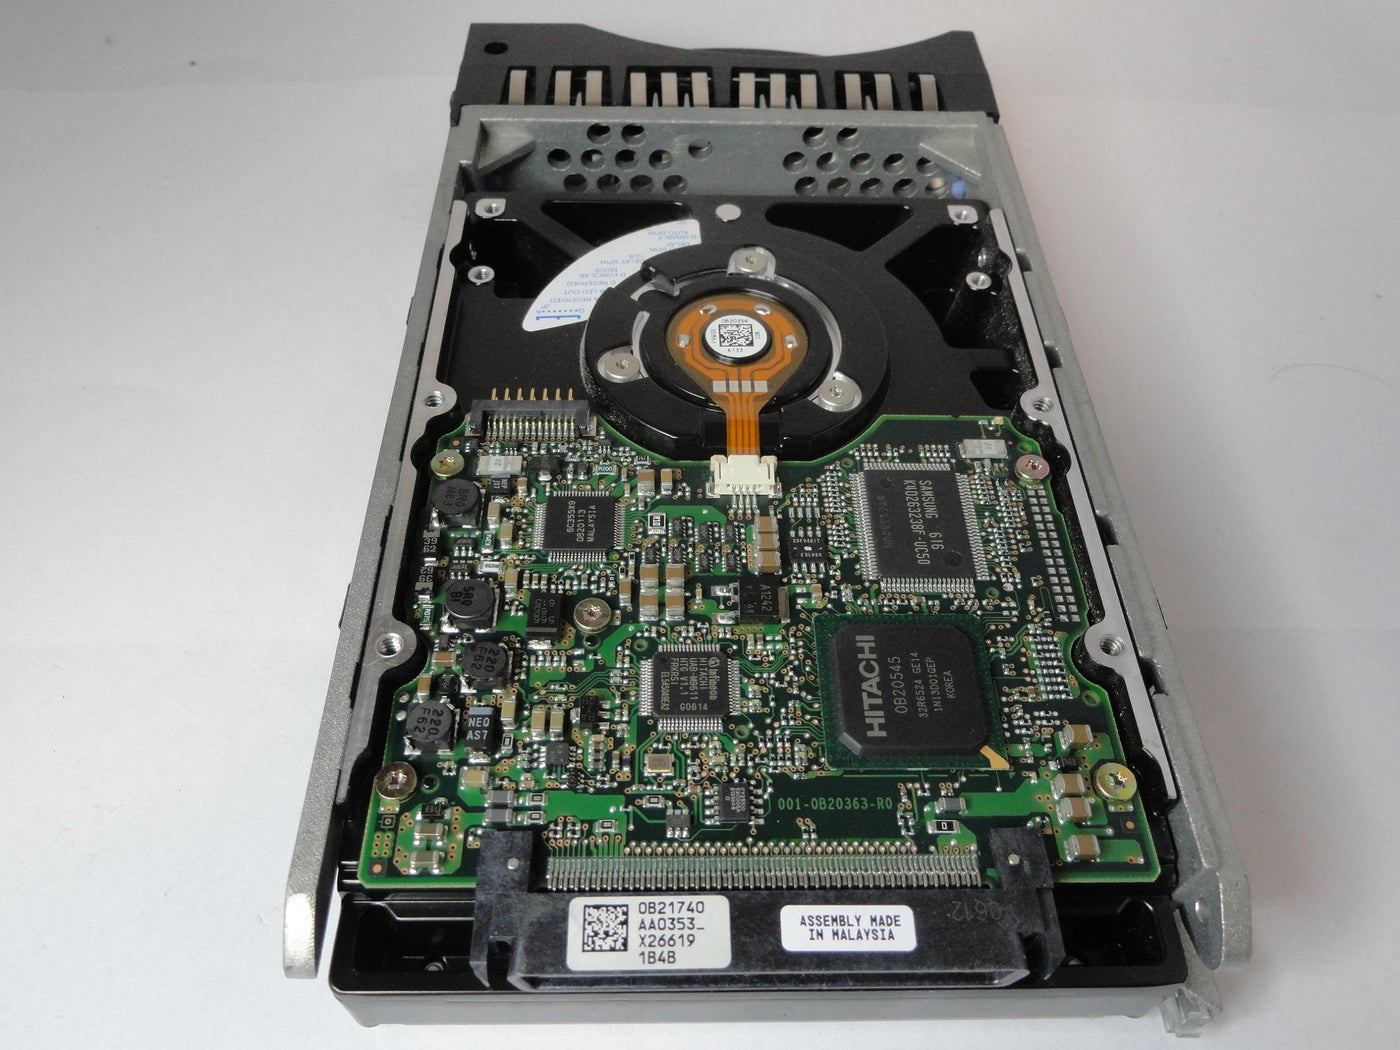 0B21000 - Hitachi IBM 146.8GB SCSI 80 Pin 15Krpm 3.5in eServer xSeries HDD in Caddy - USED